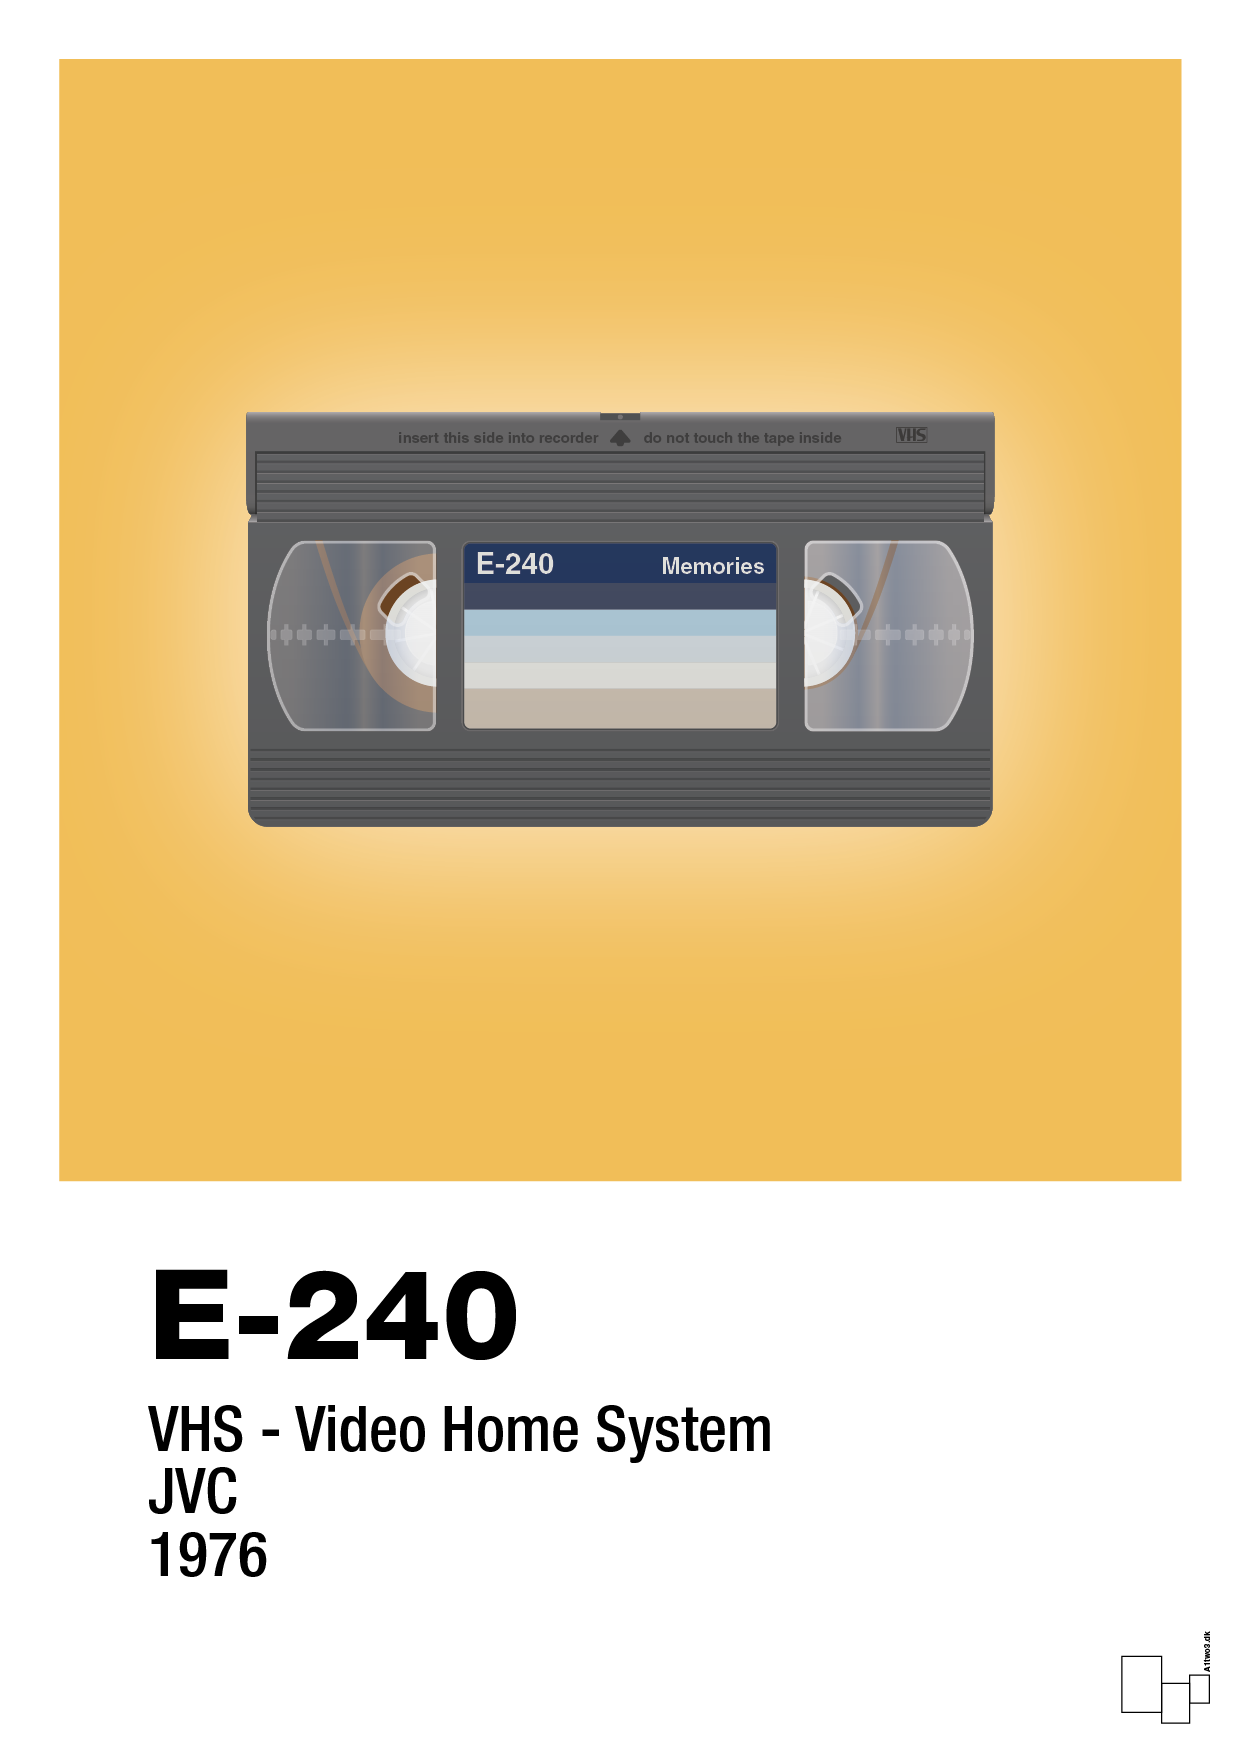 videobånd e-240 - Plakat med Grafik i Honeycomb